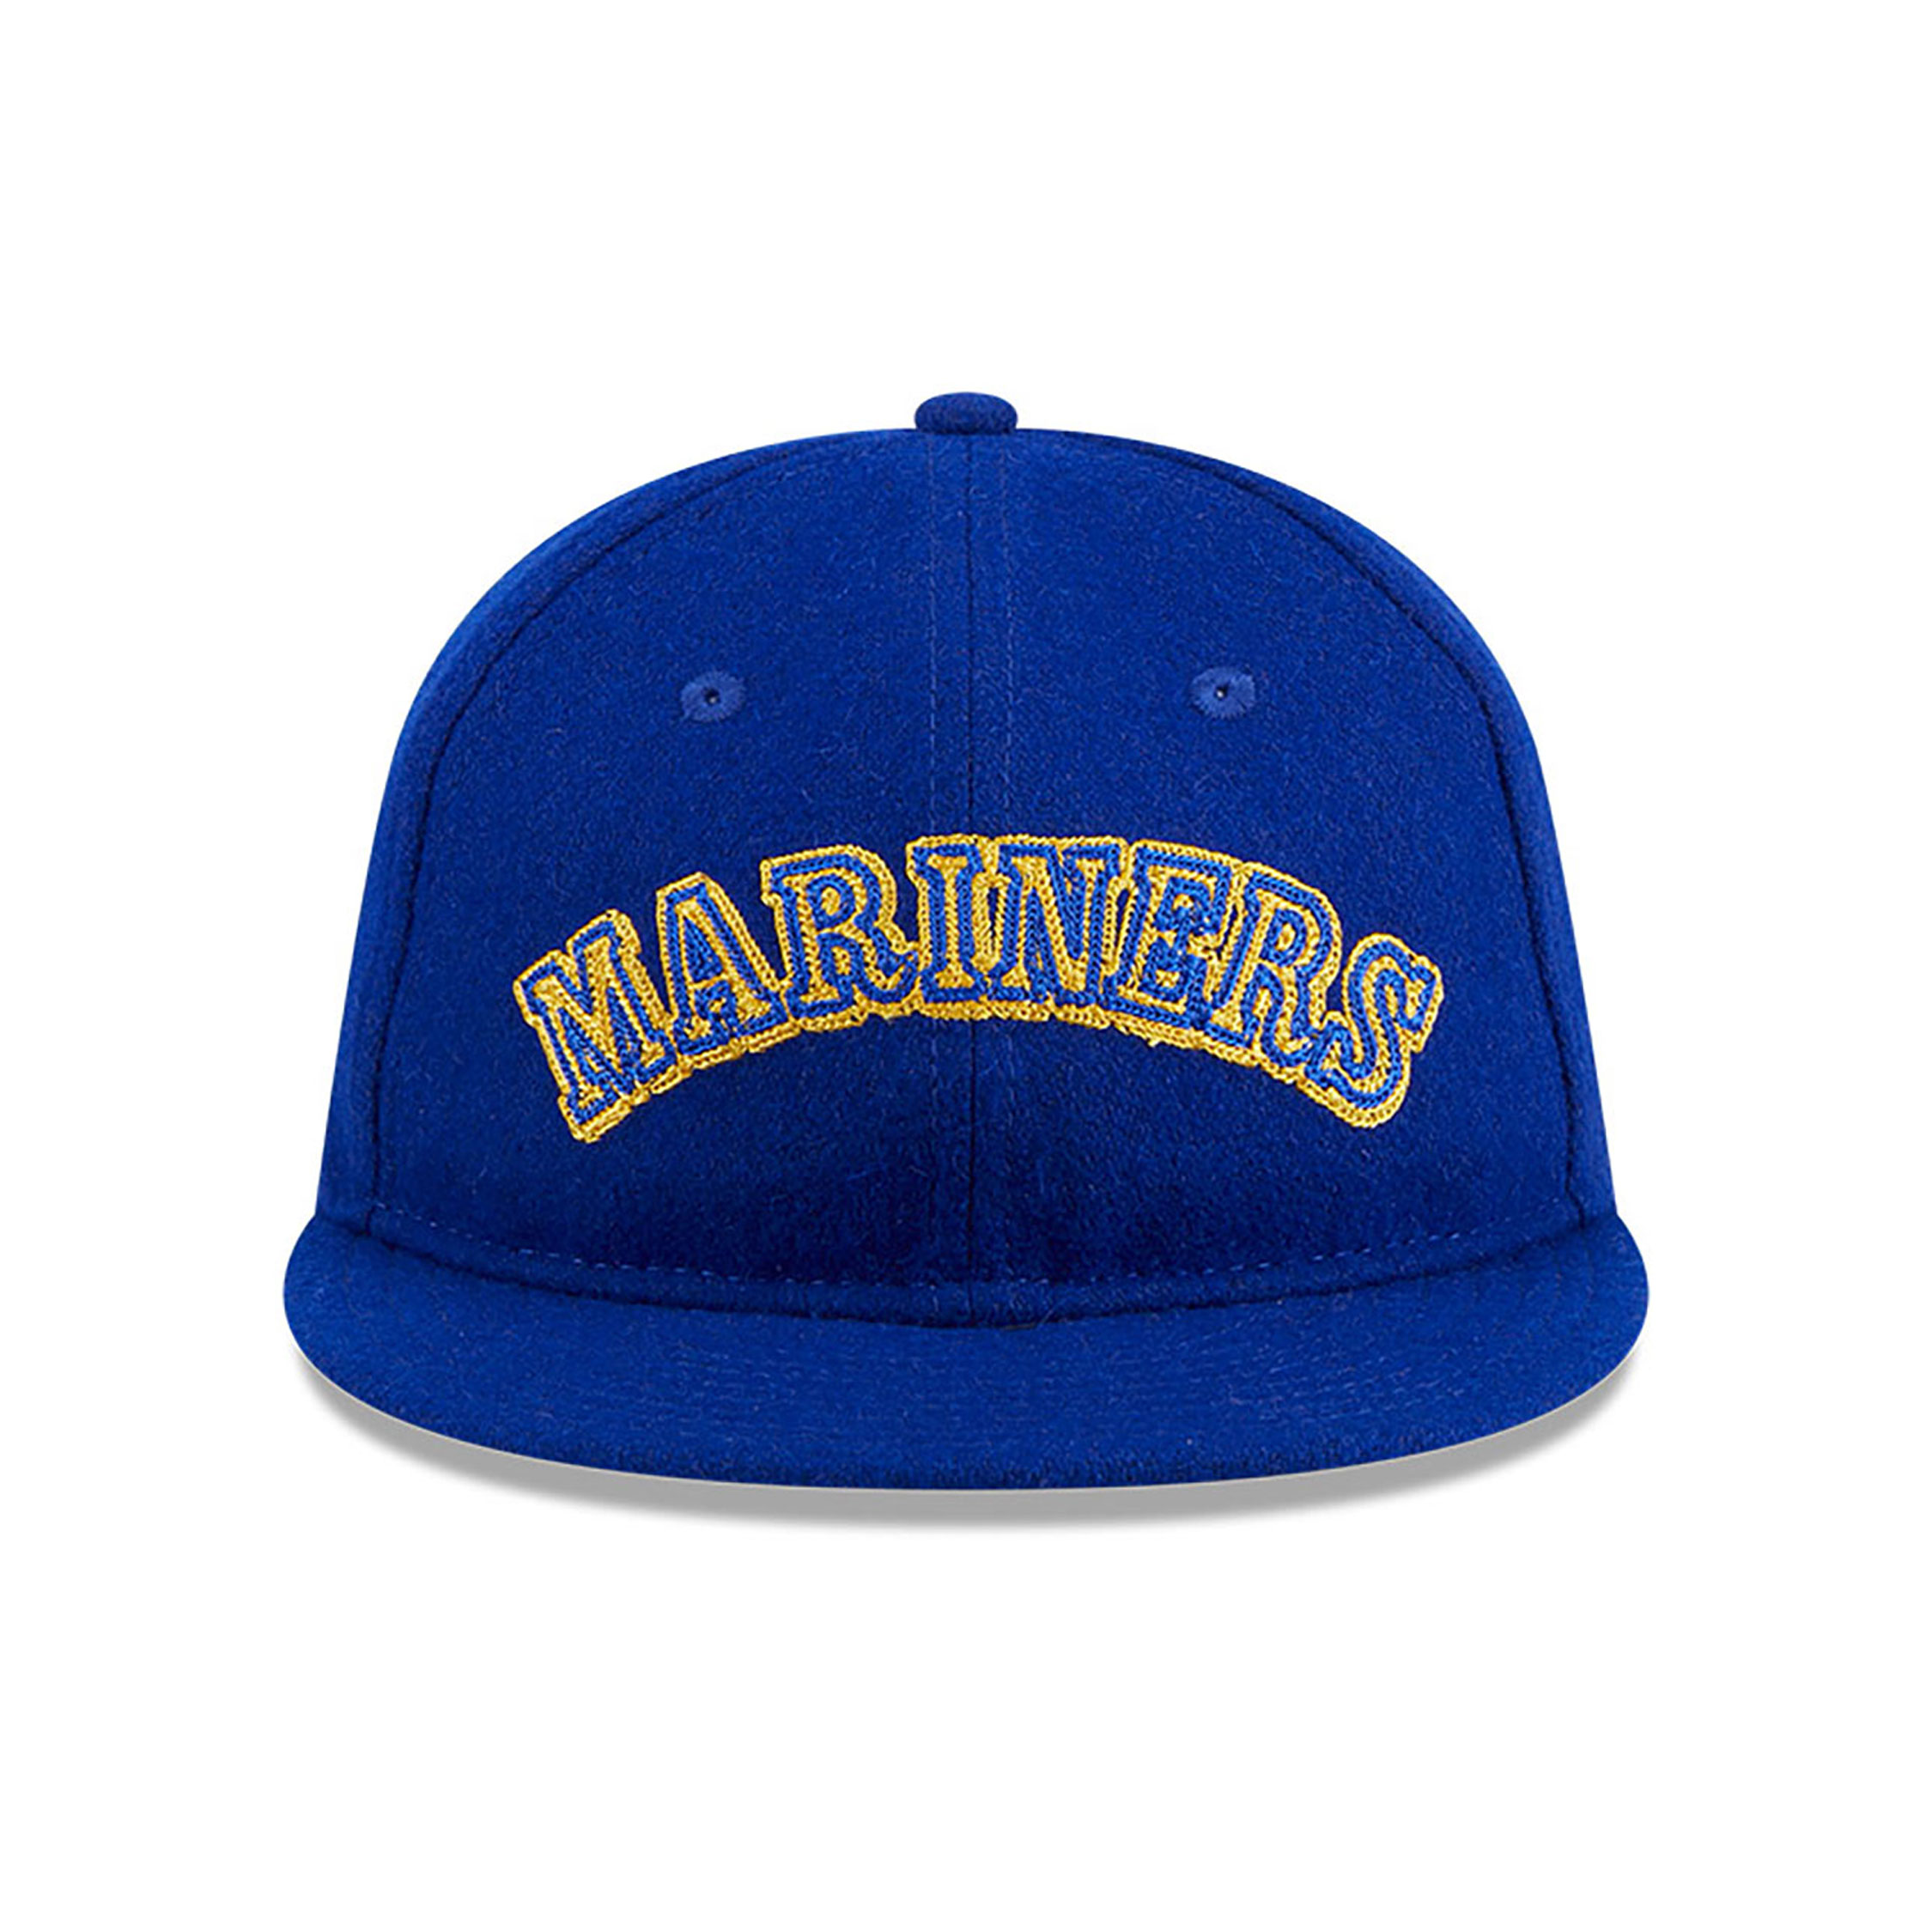 Seattle Mariners Melton Wool Blue Retro Crown 9FIFTY Strapback Cap